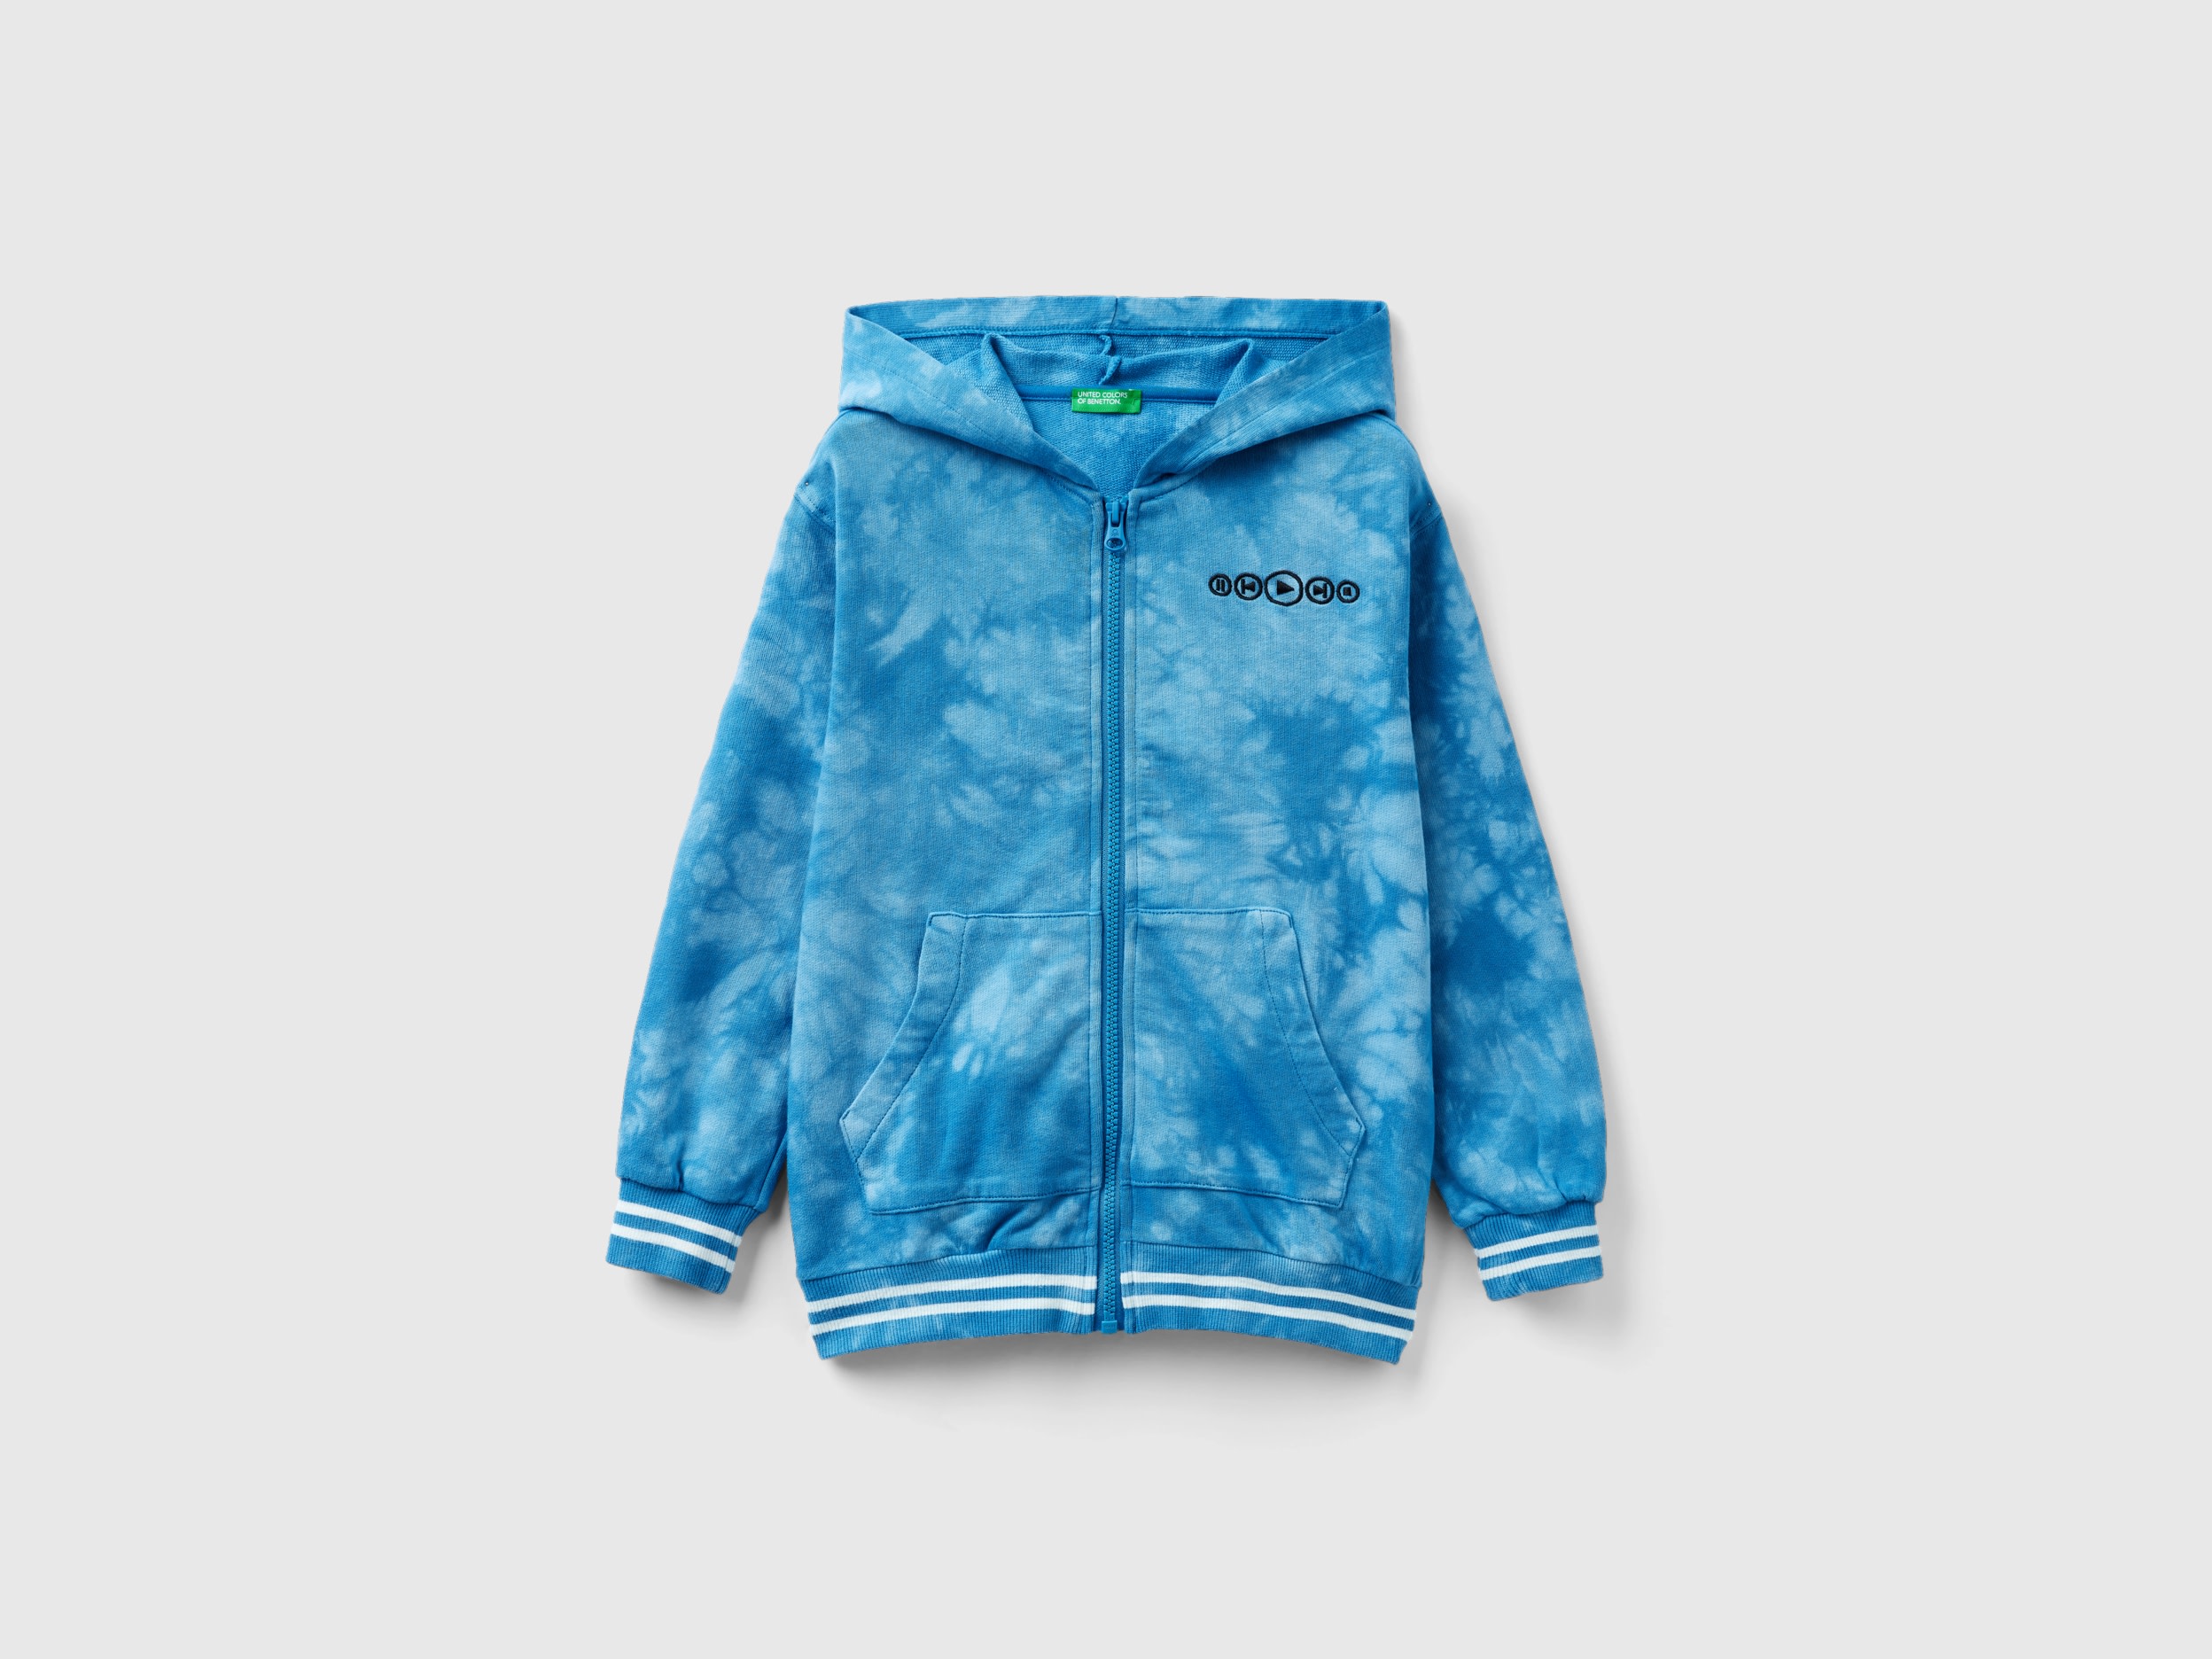 Benetton, 100% Cotton Tie-dye Sweatshirt, size XL, Light Blue, Kids